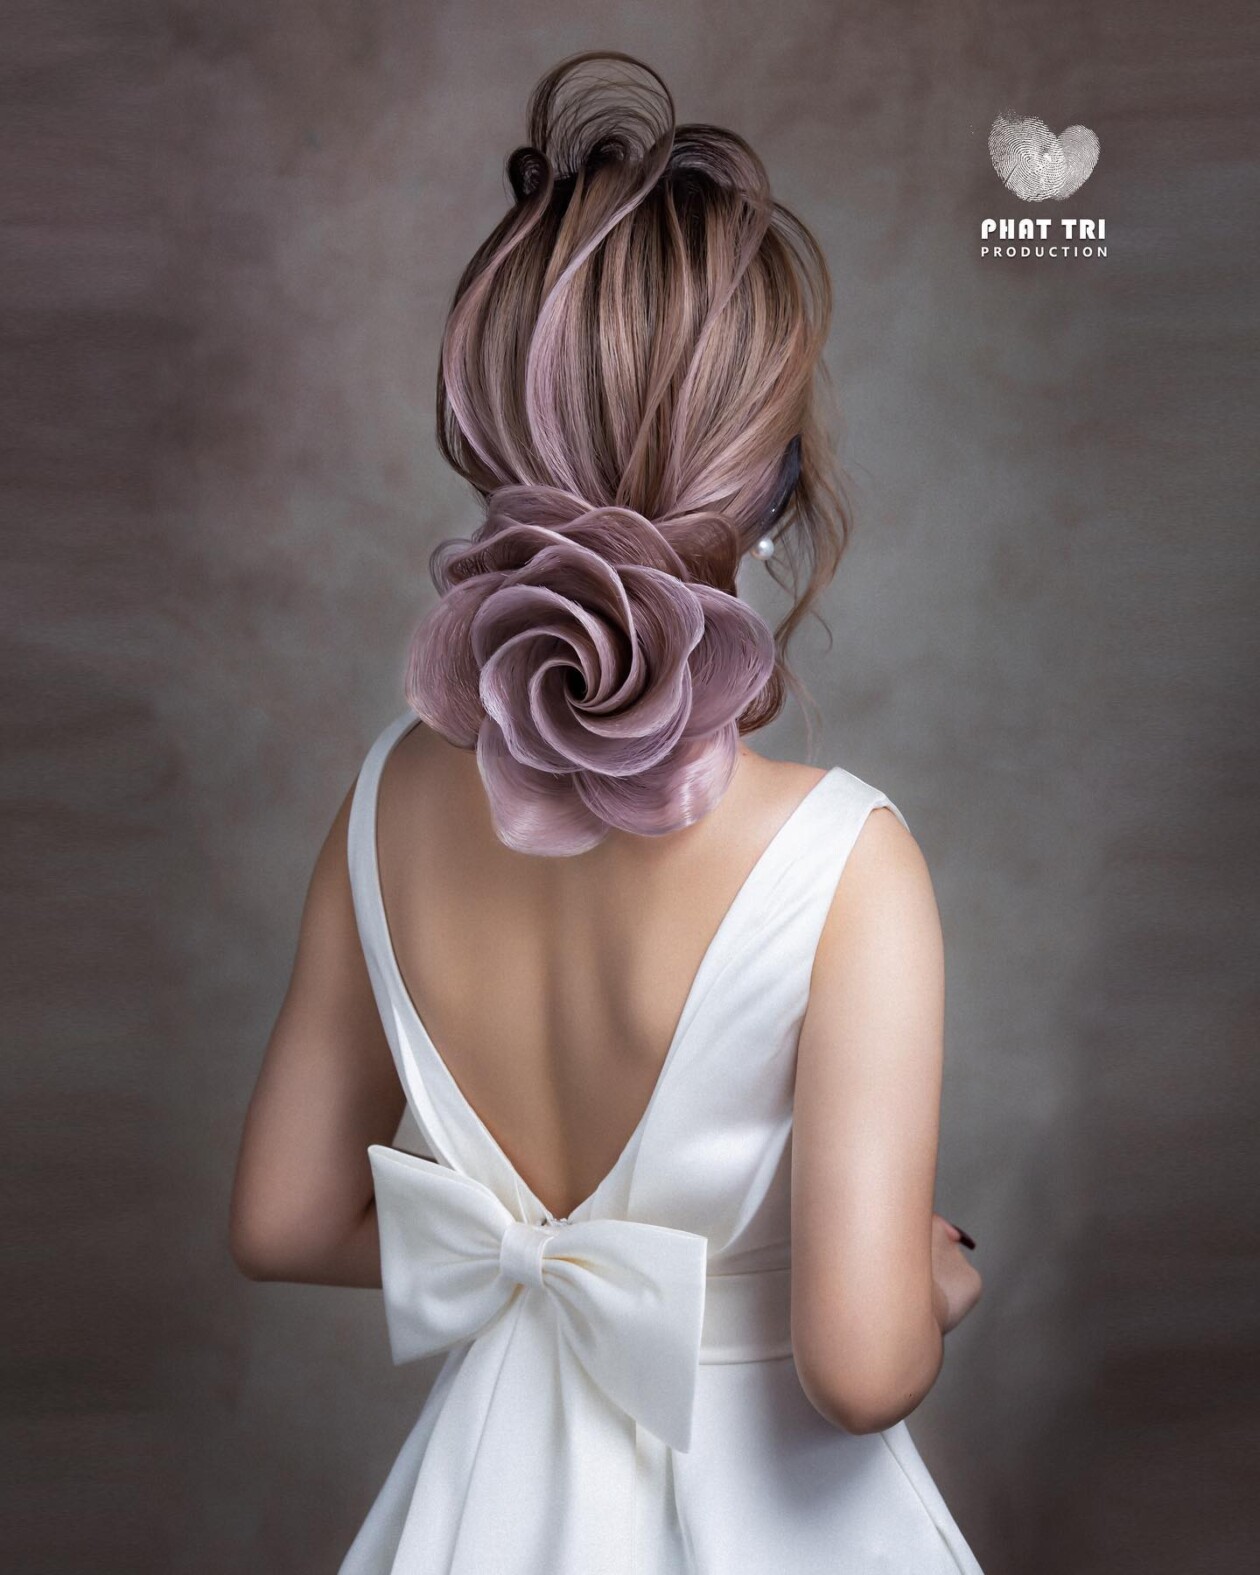 Beautiful Hairstyles That Look Like Ornate Flowers By Nguyen Phat Tri (6)